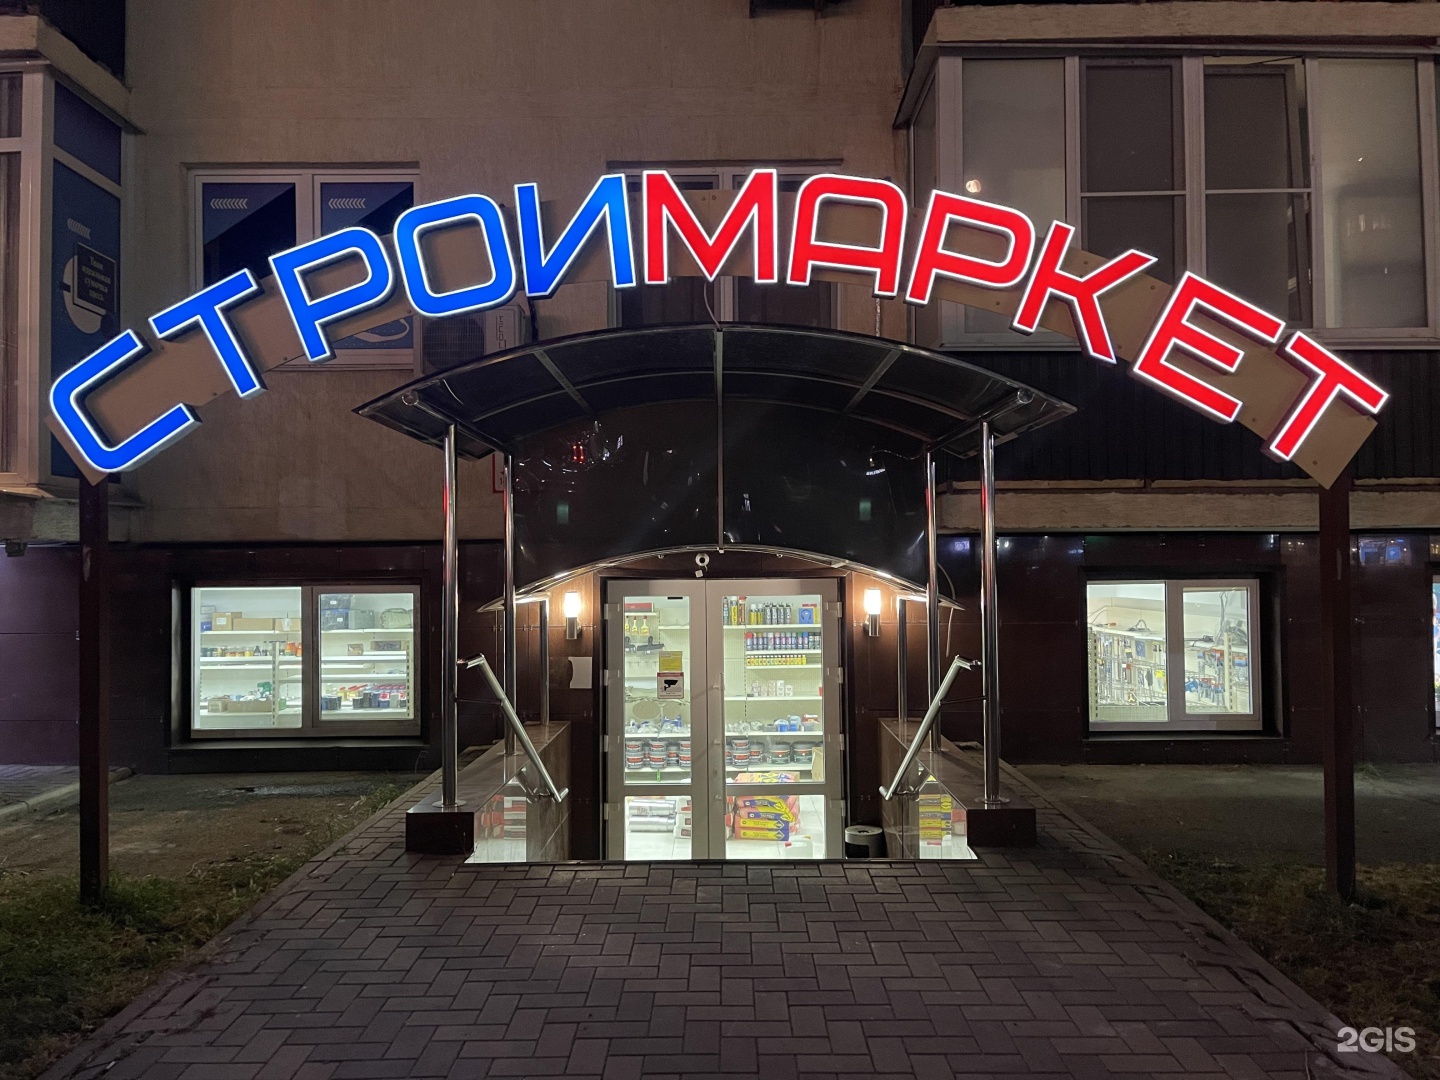 Кубань строймаркет